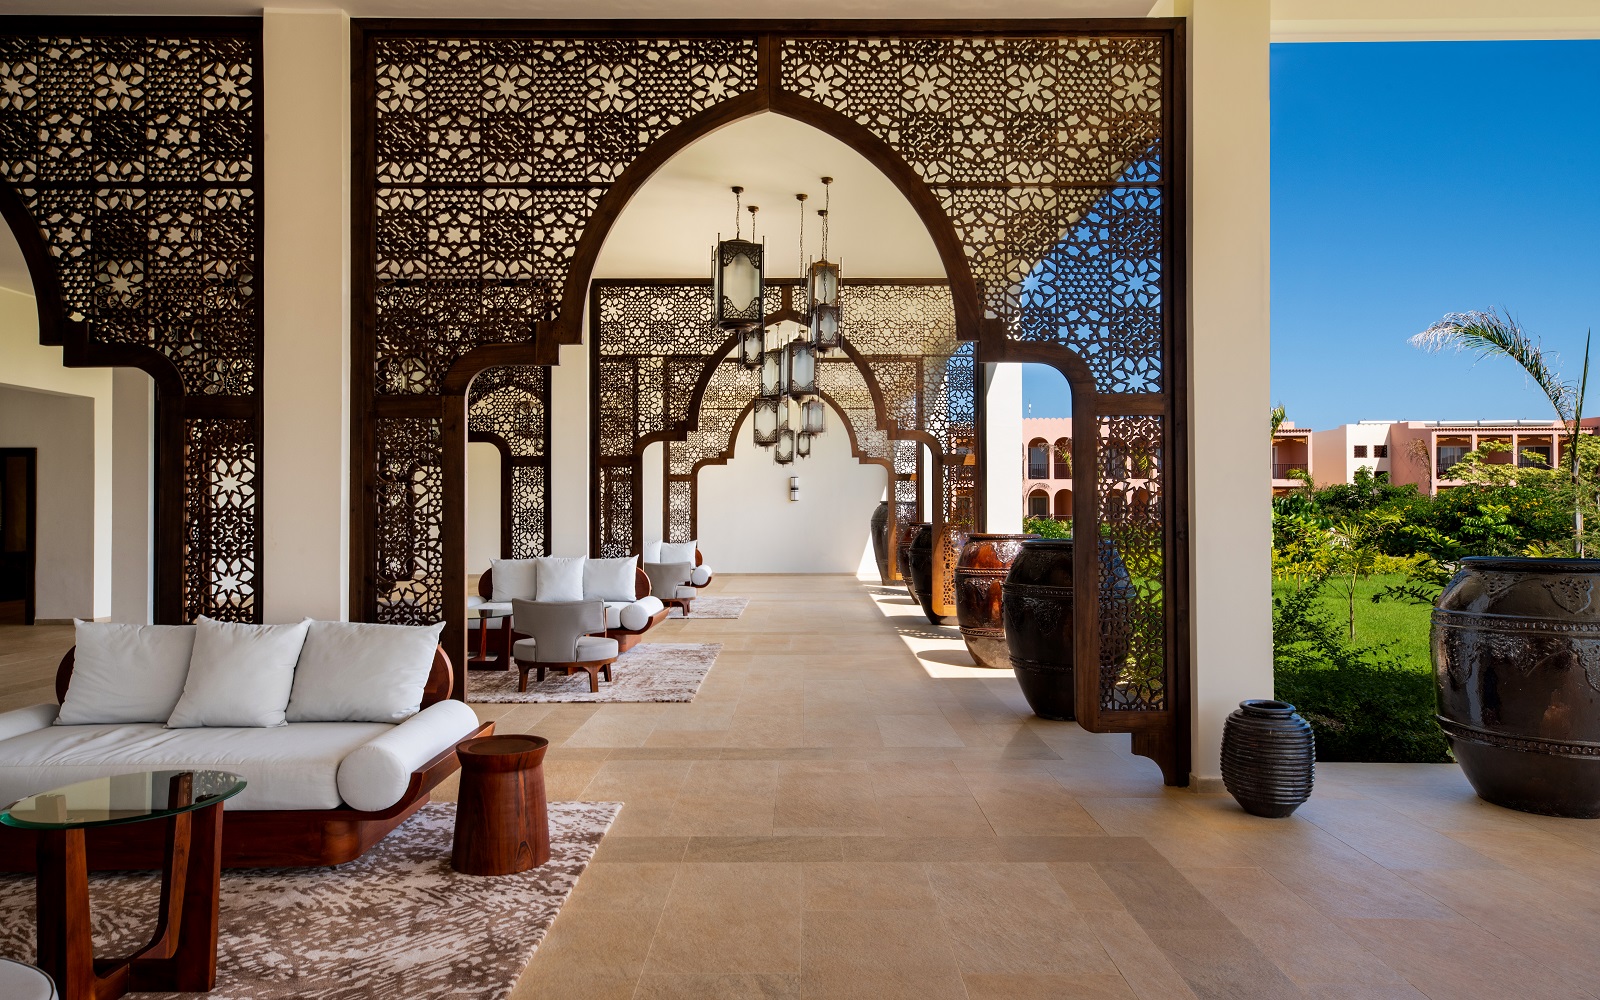 arabic screens and stone coloured tiles from Atals Concorde line the corridor at the Zanzibar resort